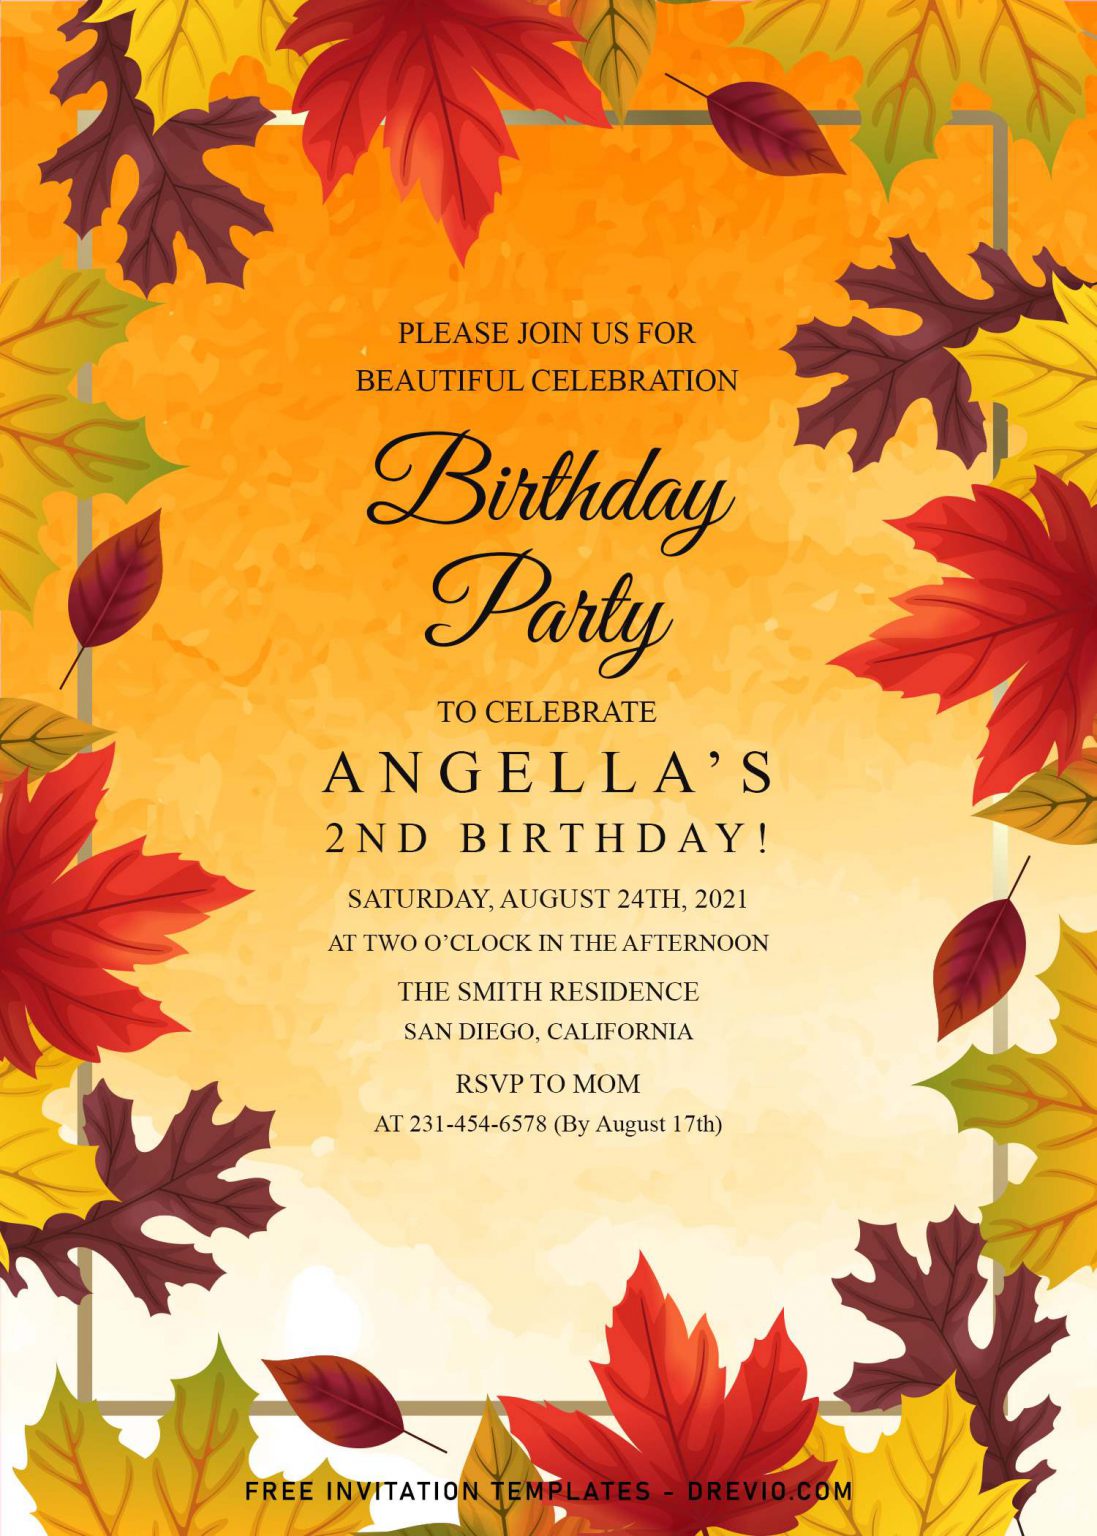 8+ Foliage Birthday Invitation Templates For Your Kid’s Birthday Party ...